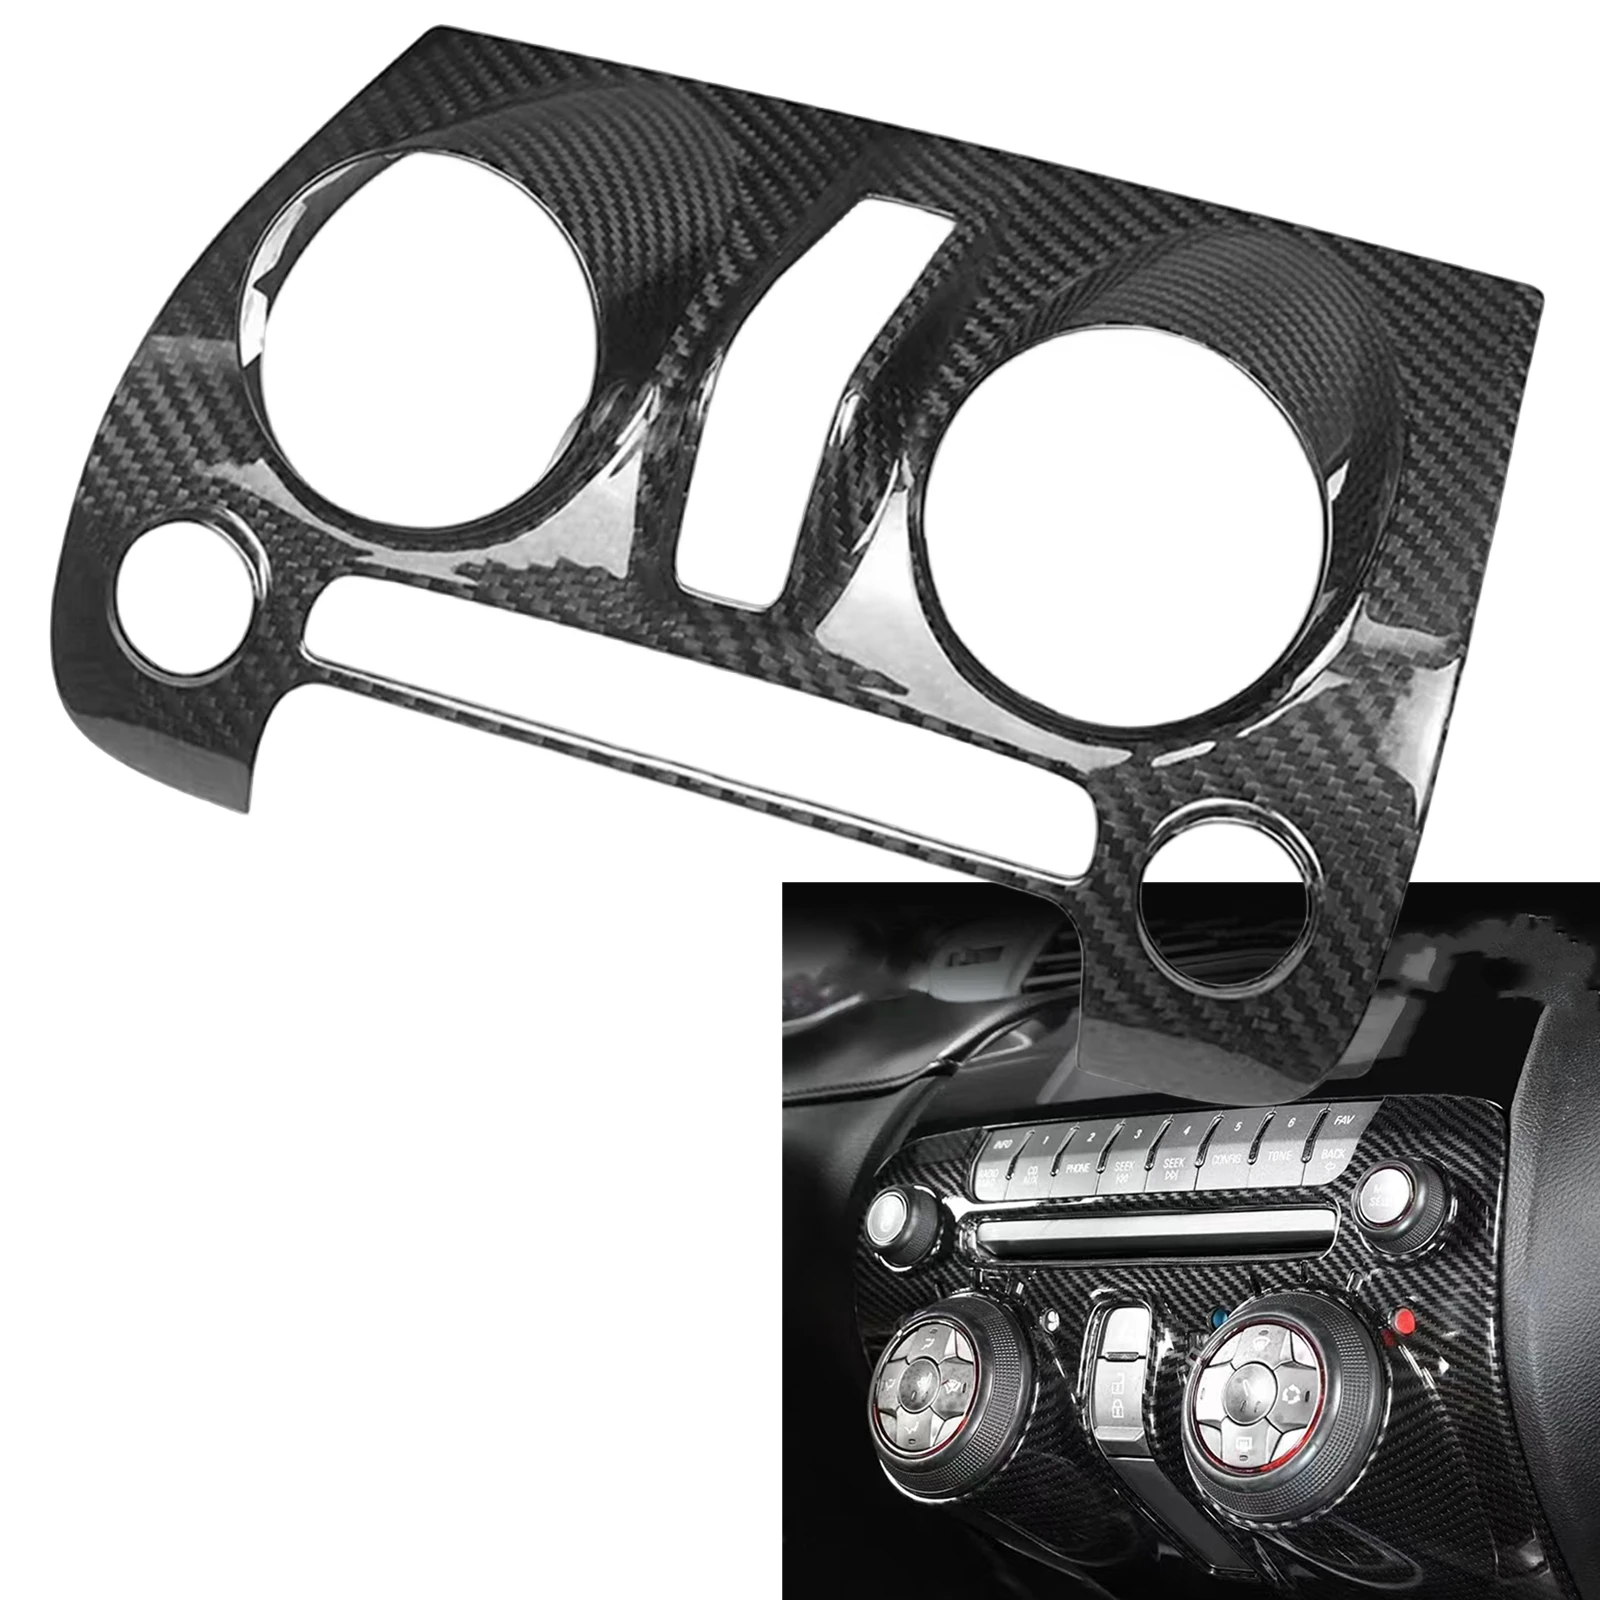 

For Chevy Camaro 2010 2011 2012 2013 2014 2015 Interior Real Carbon Fiber Center Console Dashboard Dash Panel Cover Trim Frame